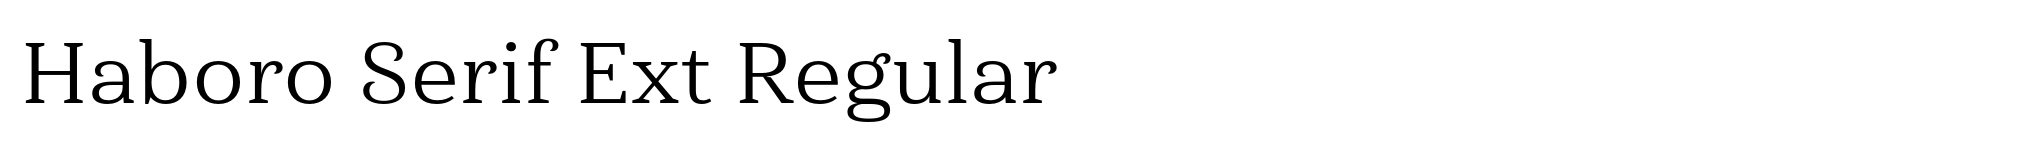 Haboro Serif Ext Regular image